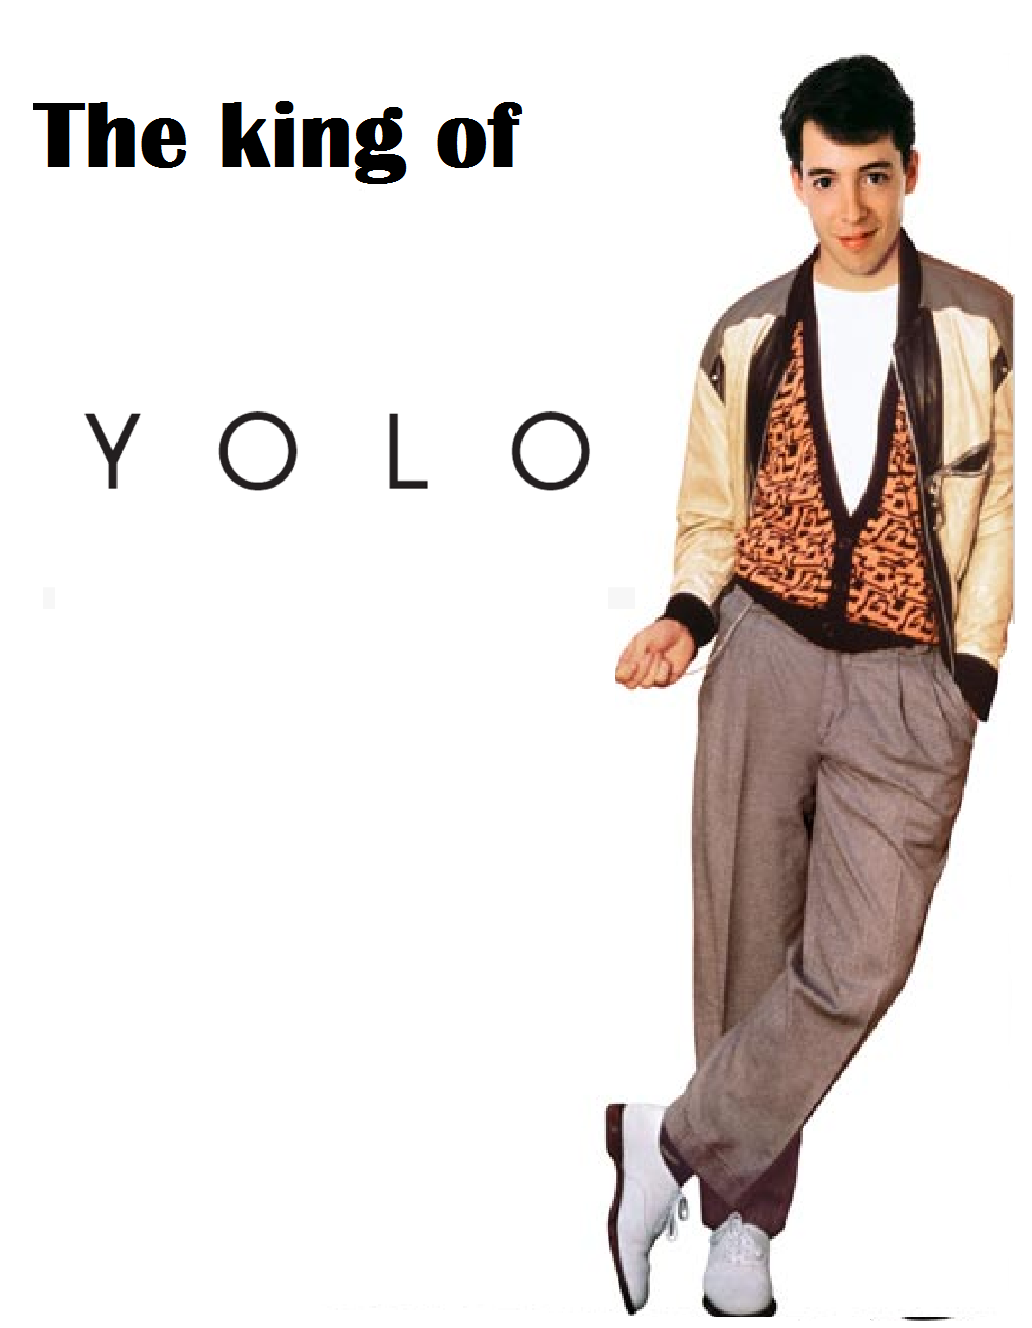 King of YOLO.